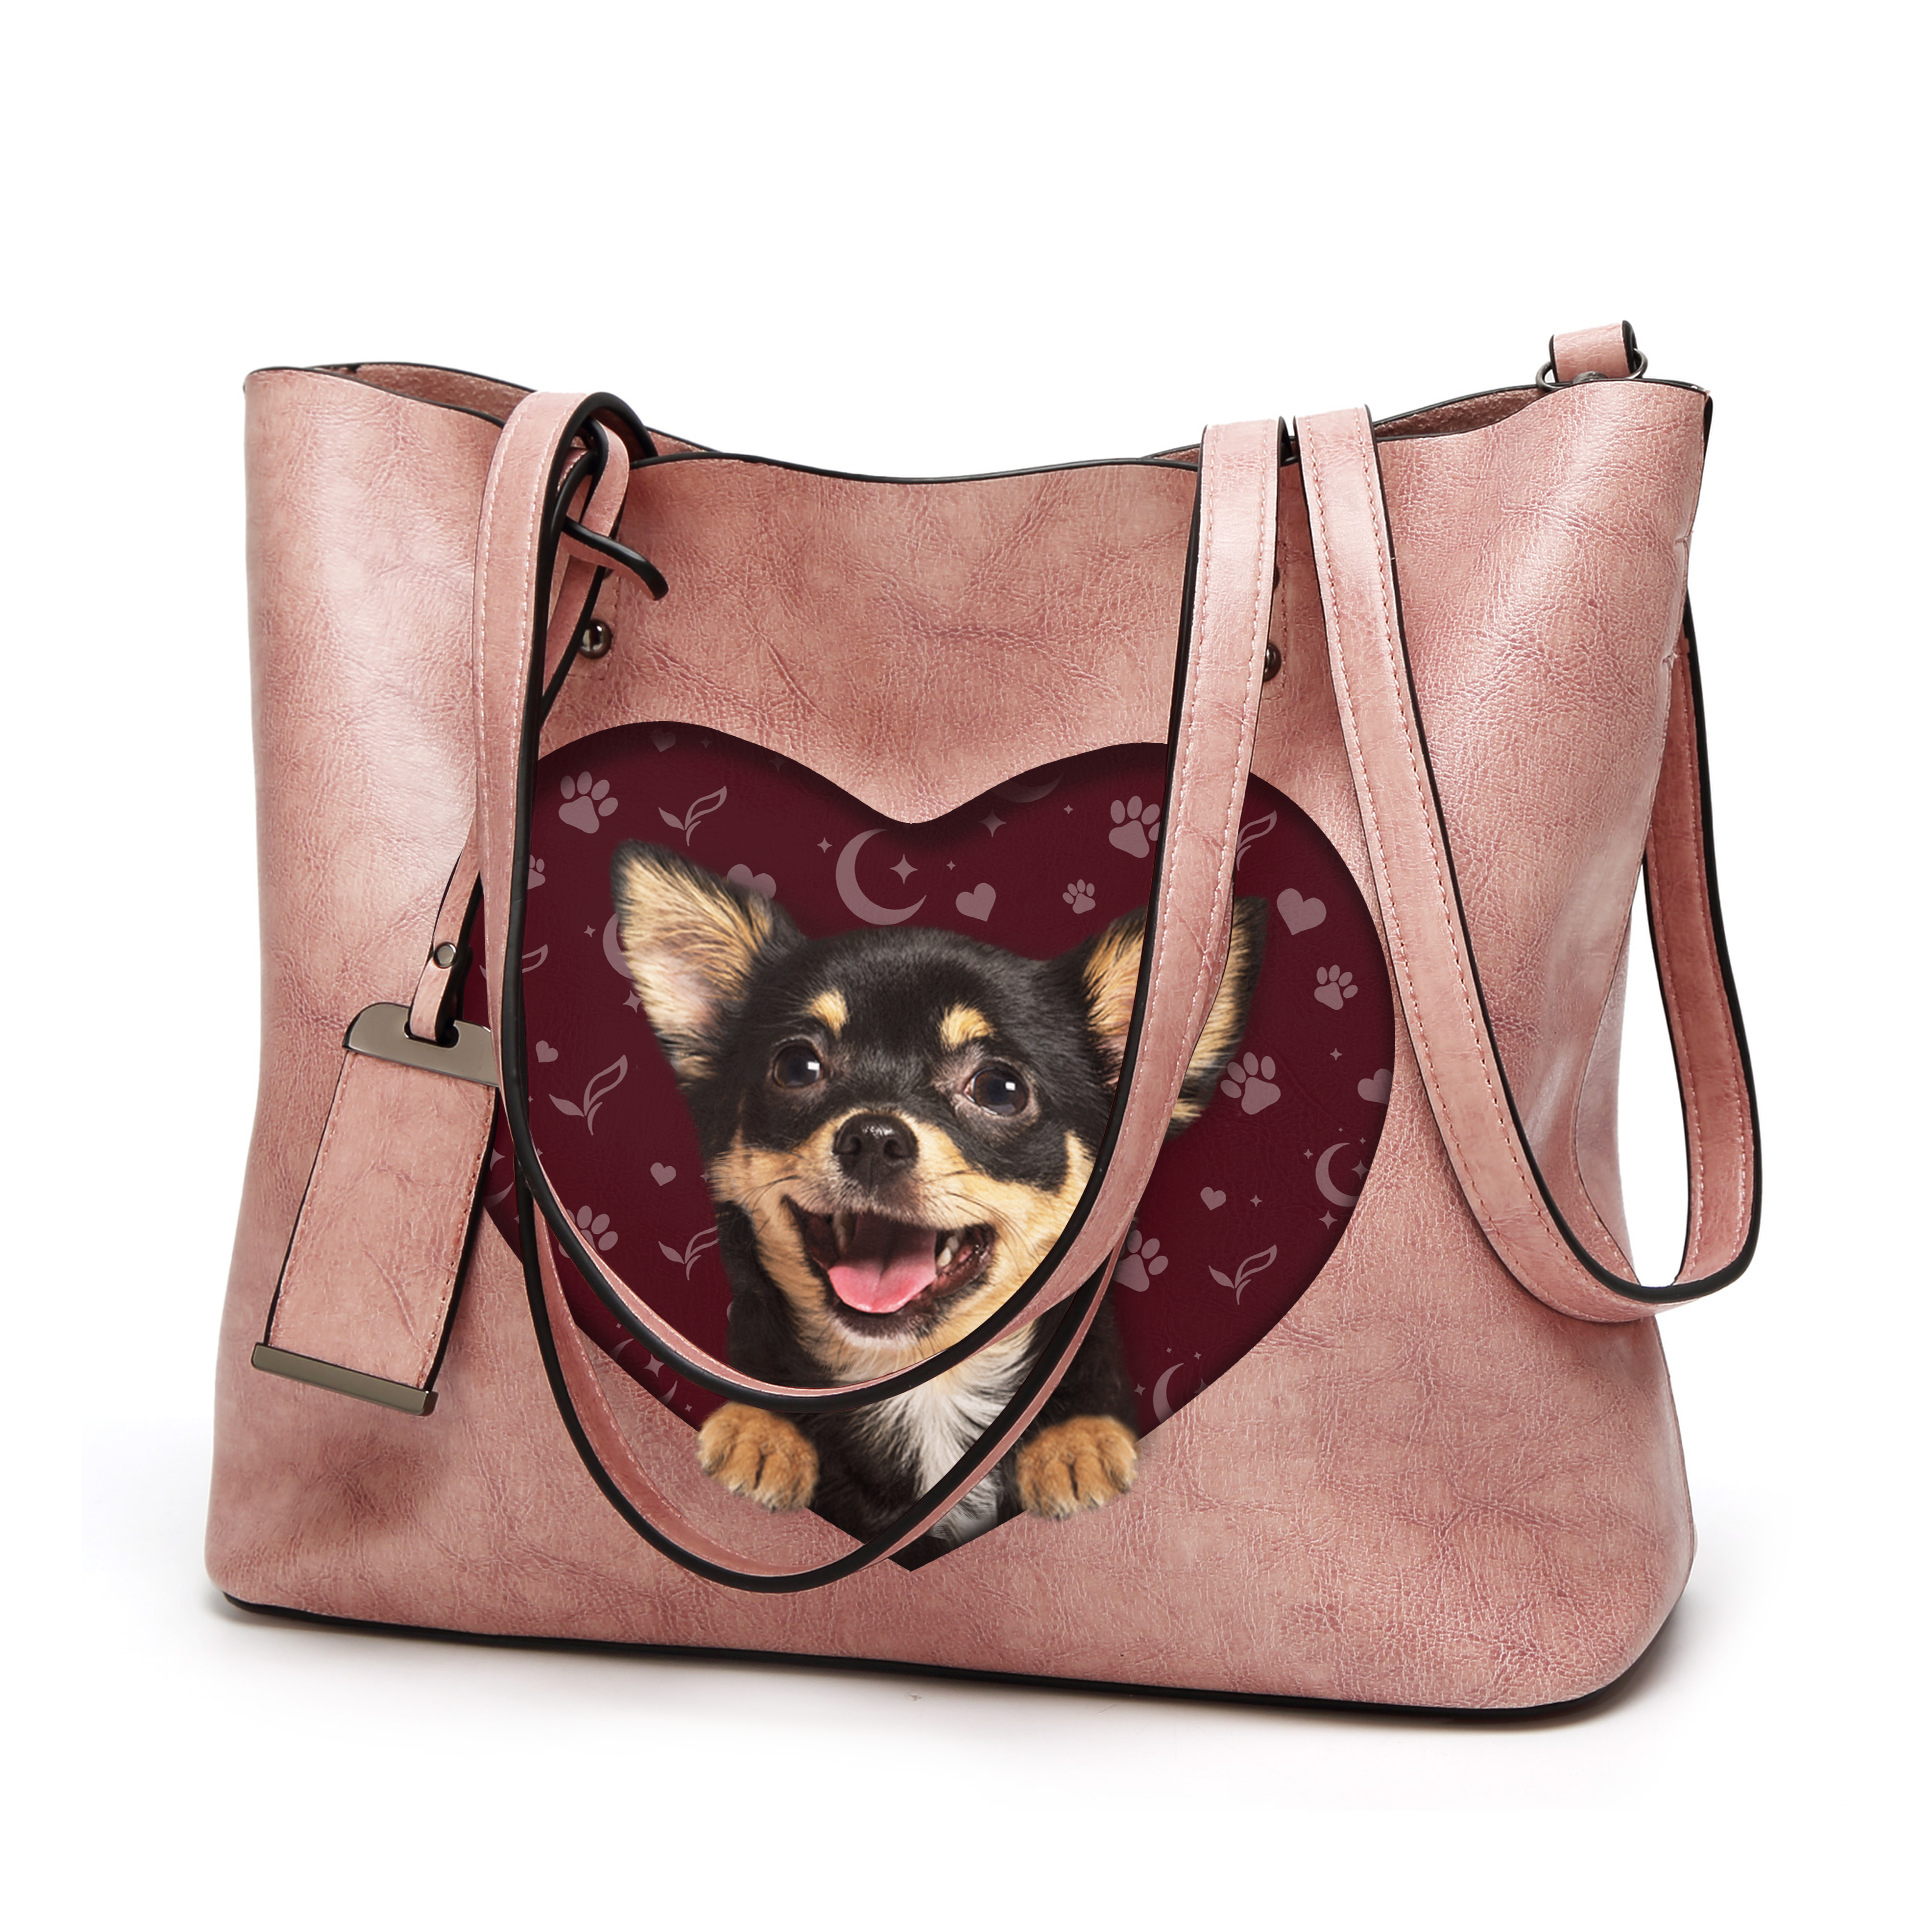 I Know I'm Cute - Chihuahua Glamour Handbag V3 - 10